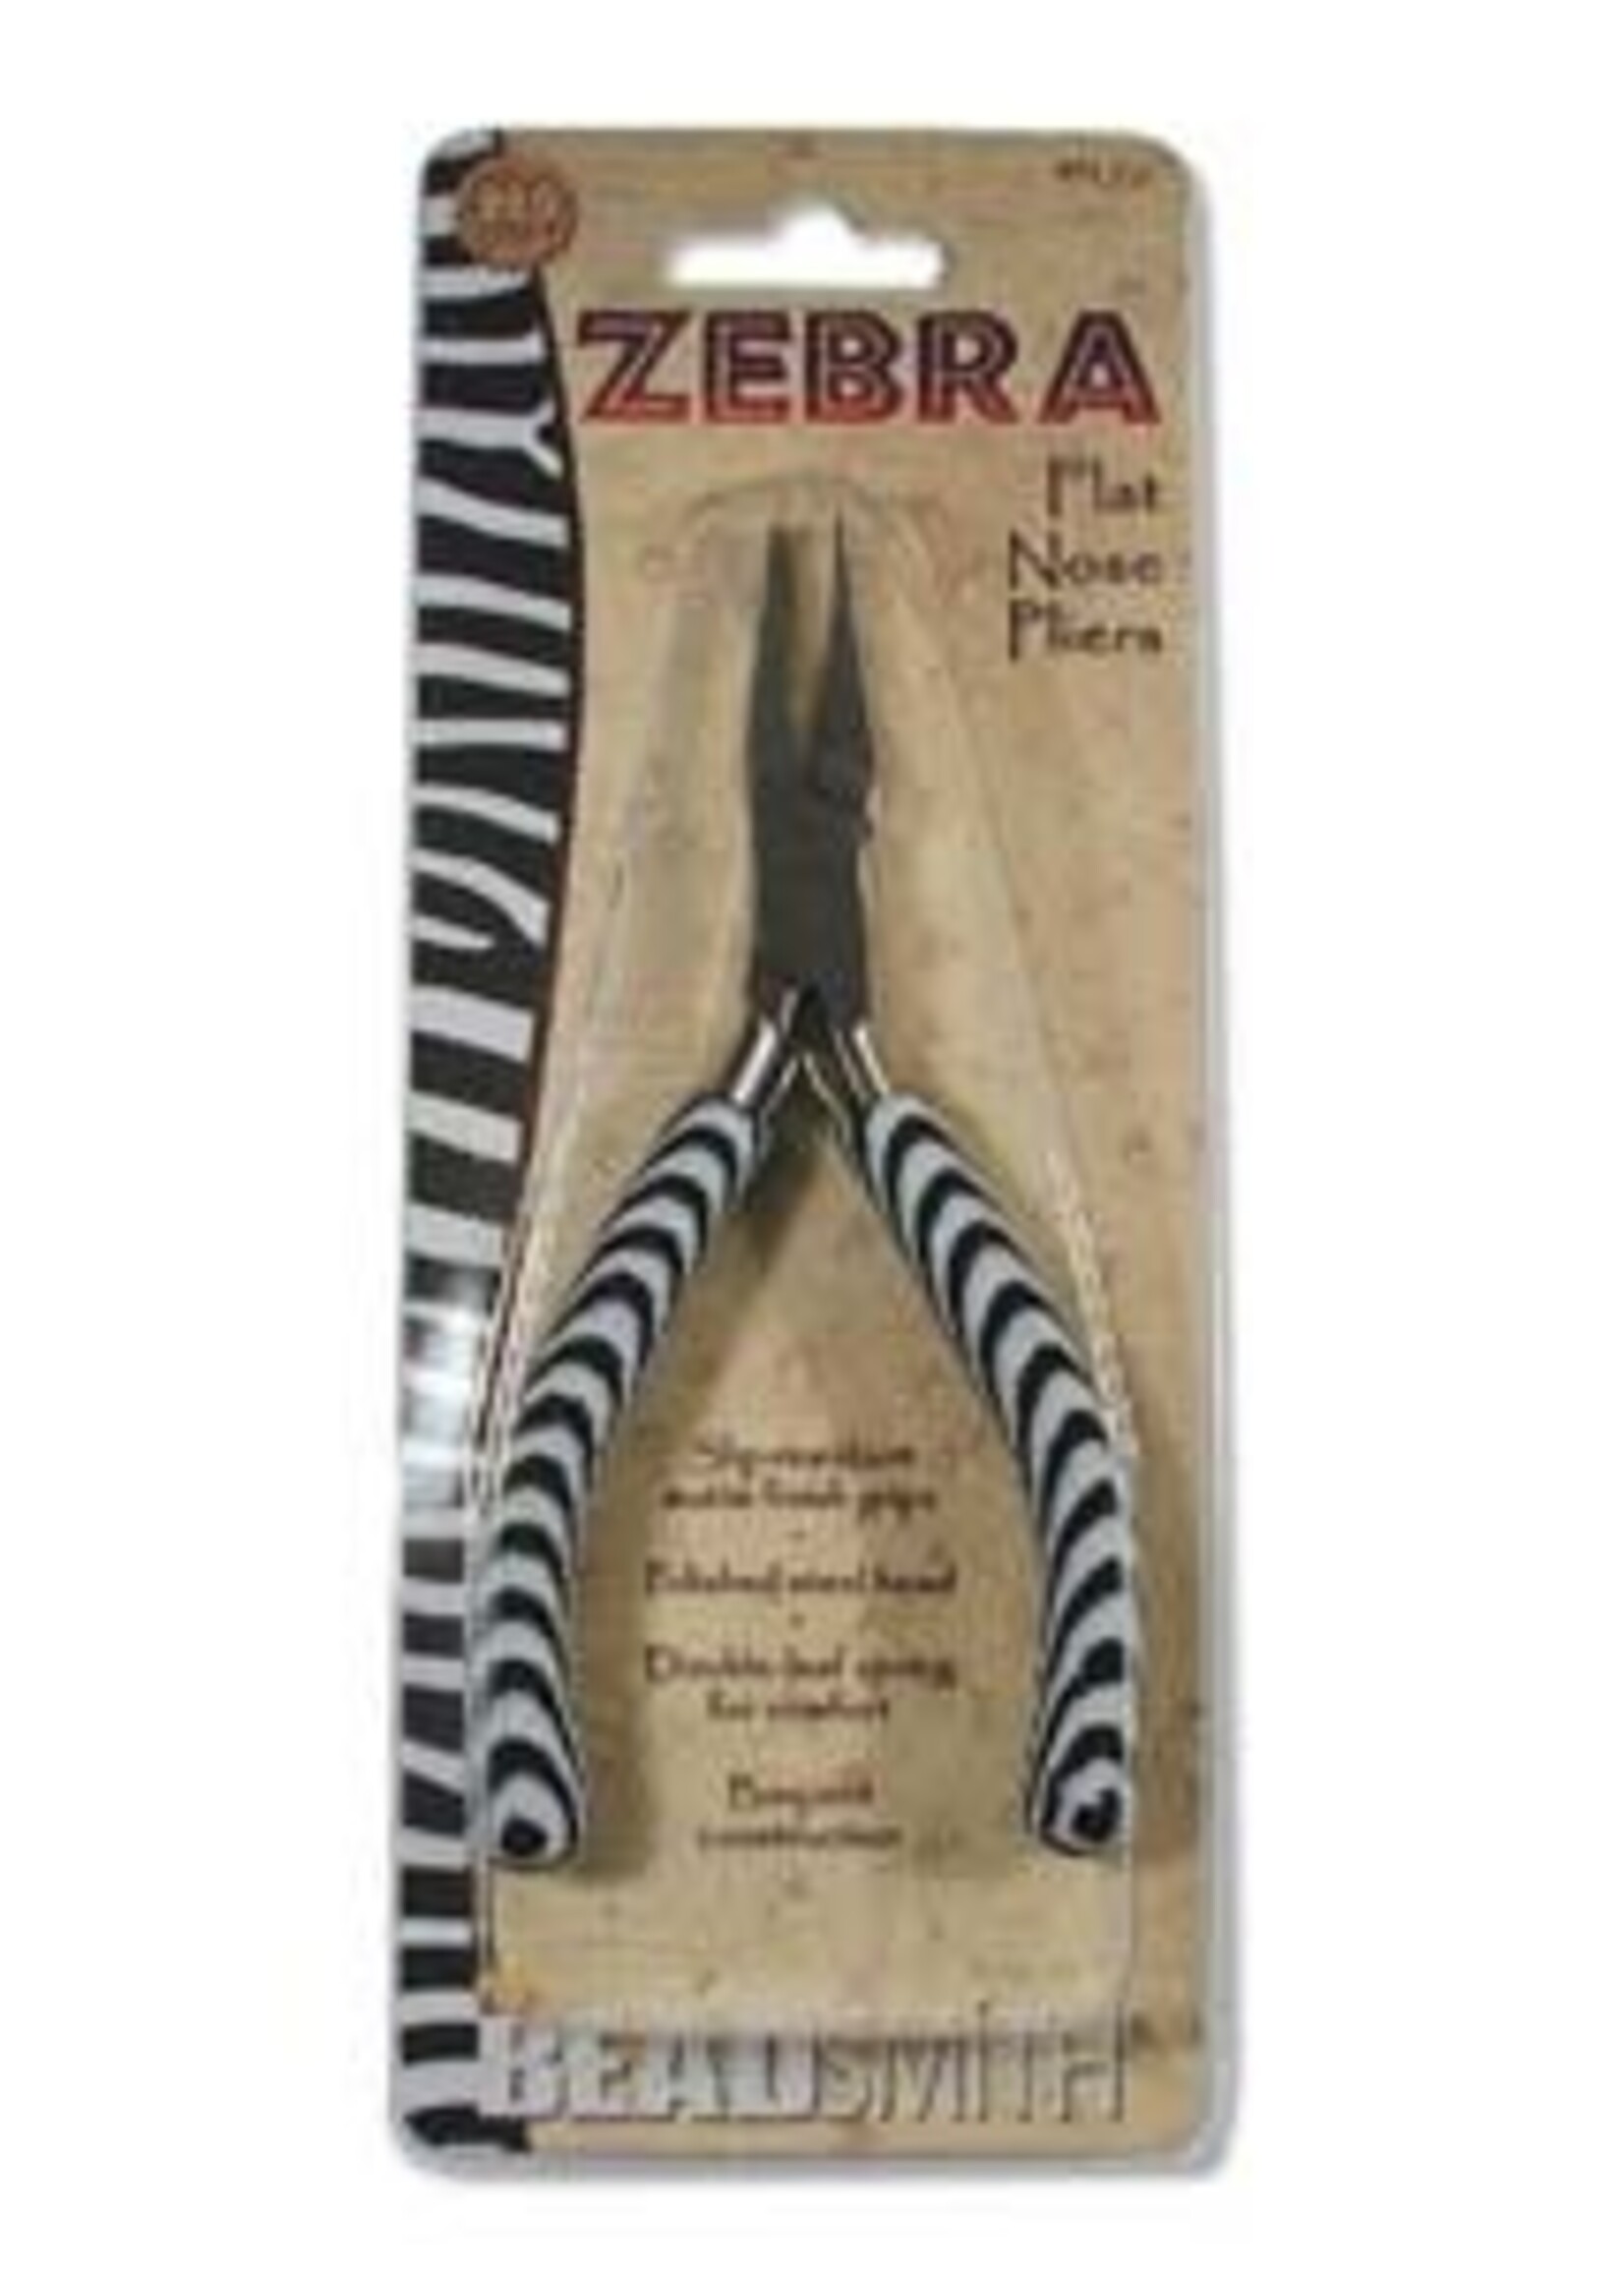 Zebra Flat Nose Pliers